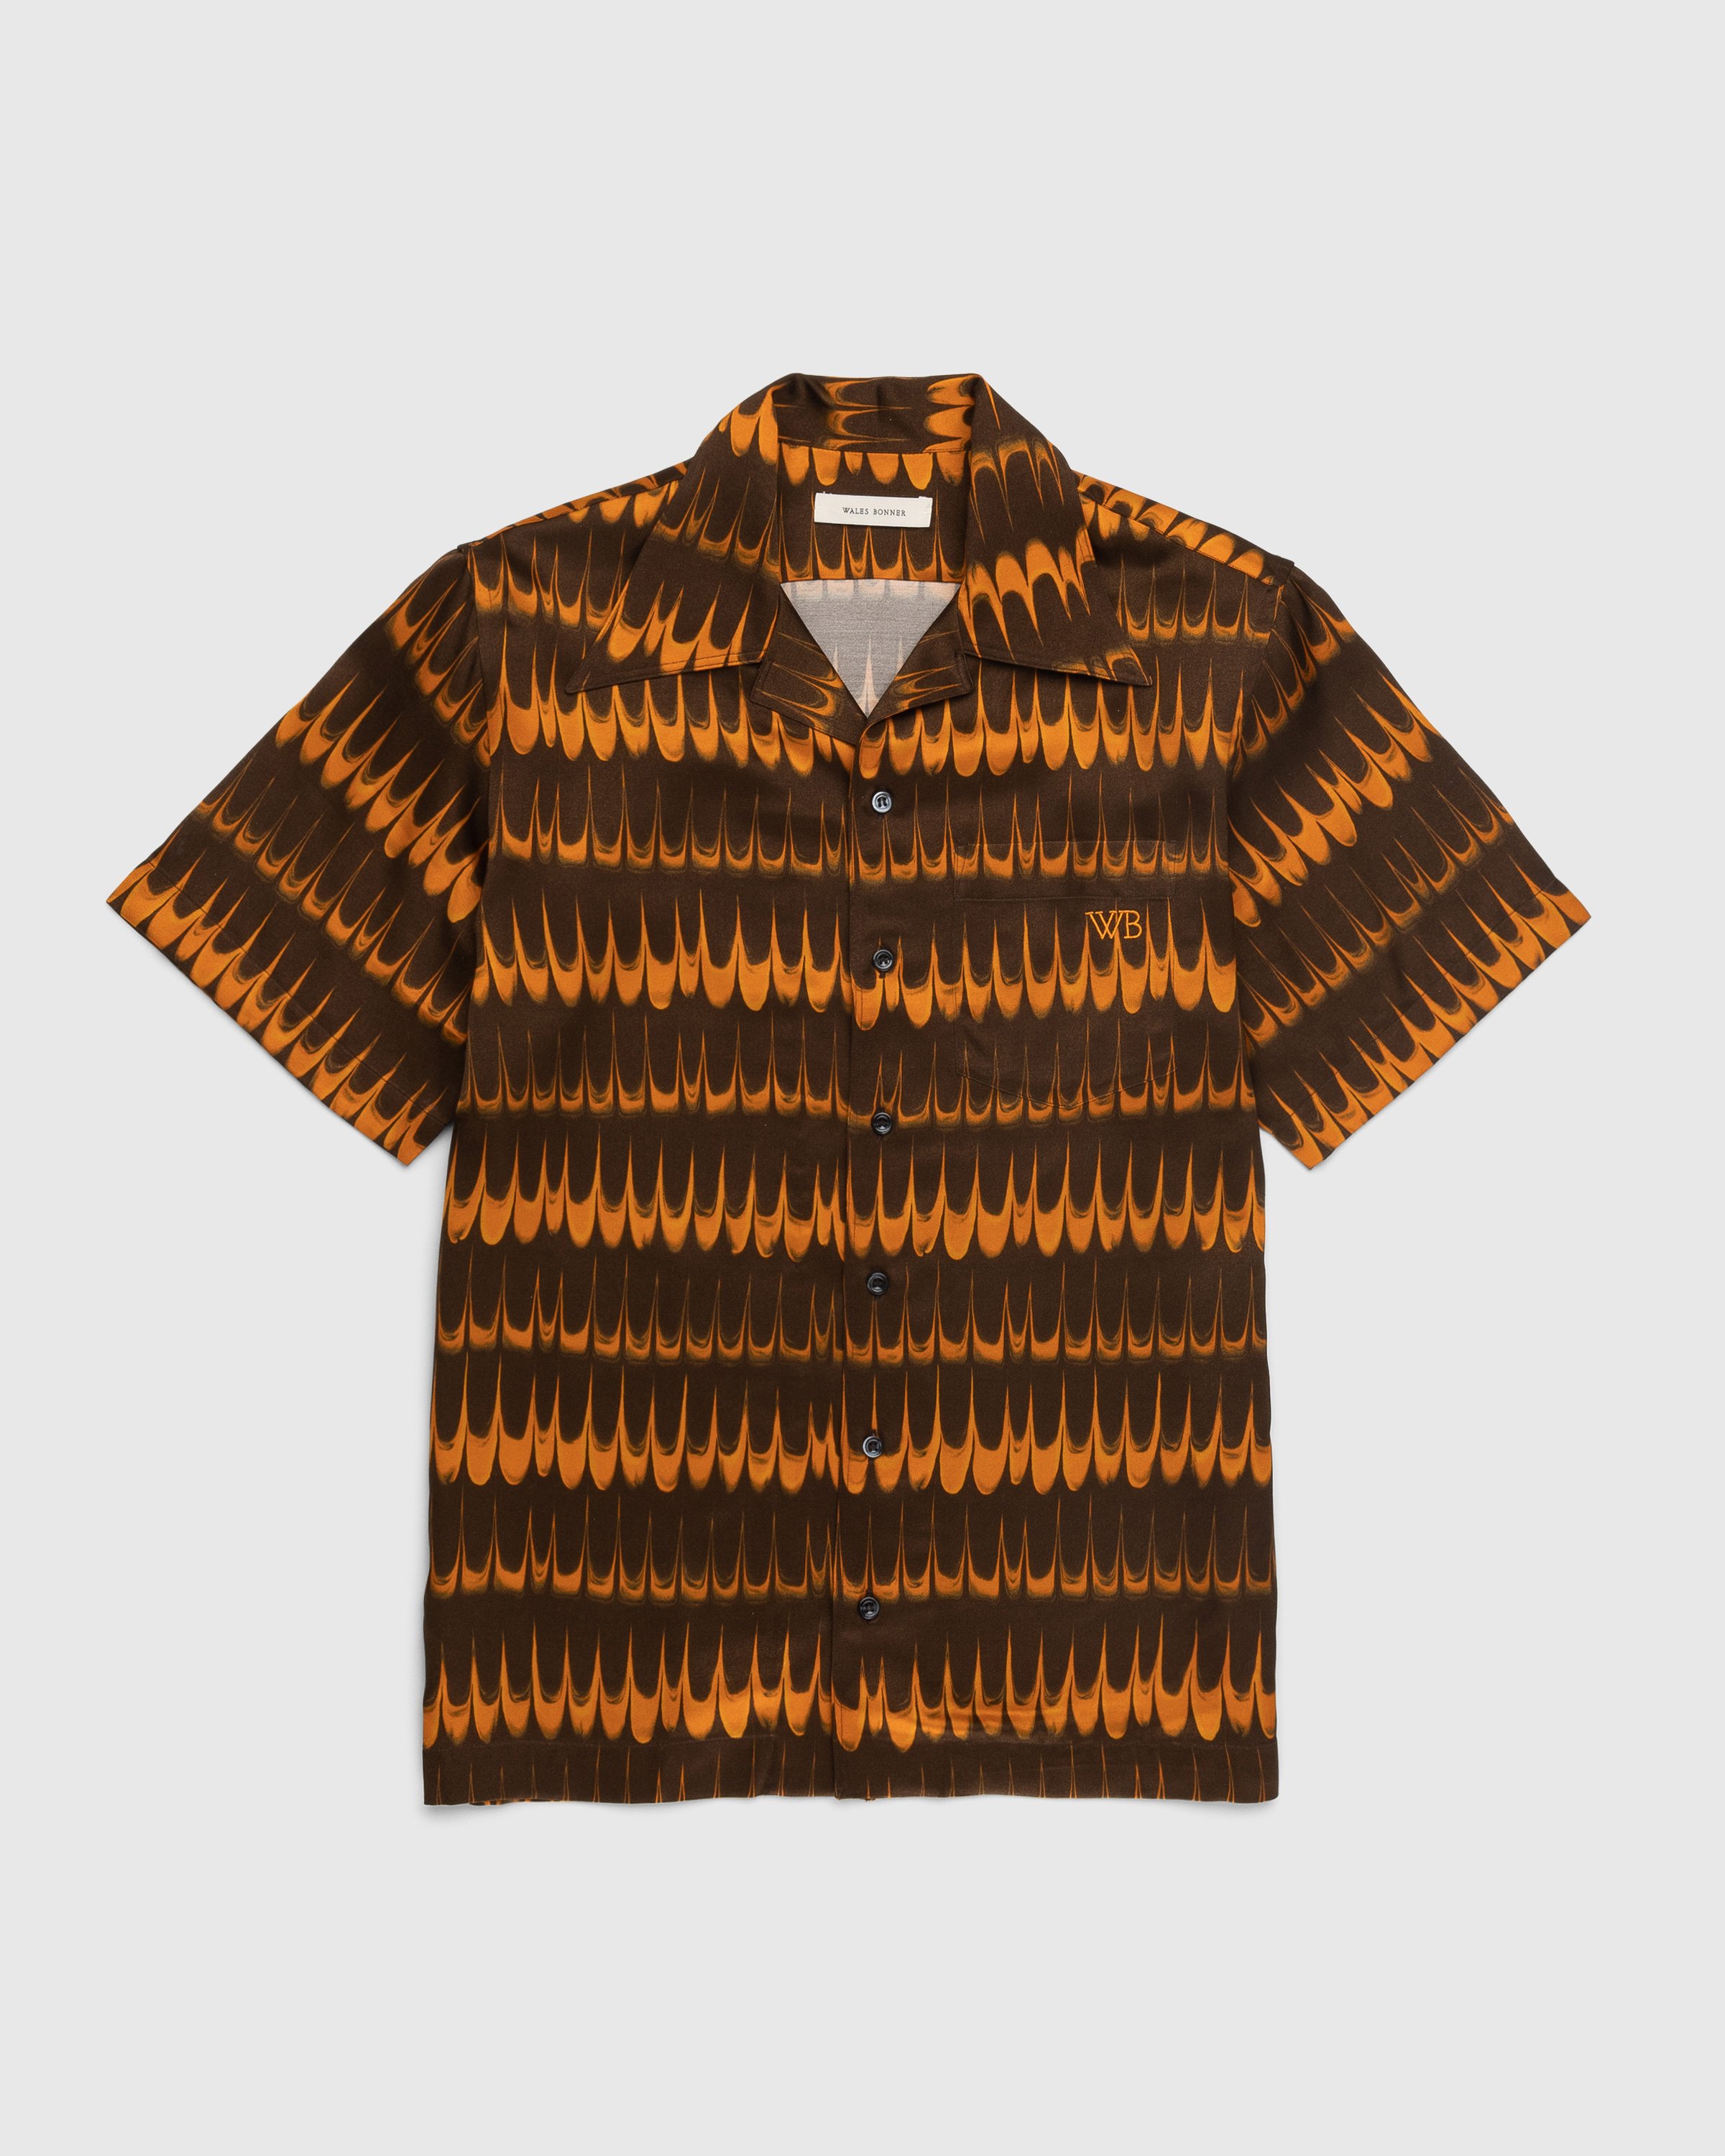 Wales Bonner - Rhythm Shirt Brown - Clothing - Brown - Image 1